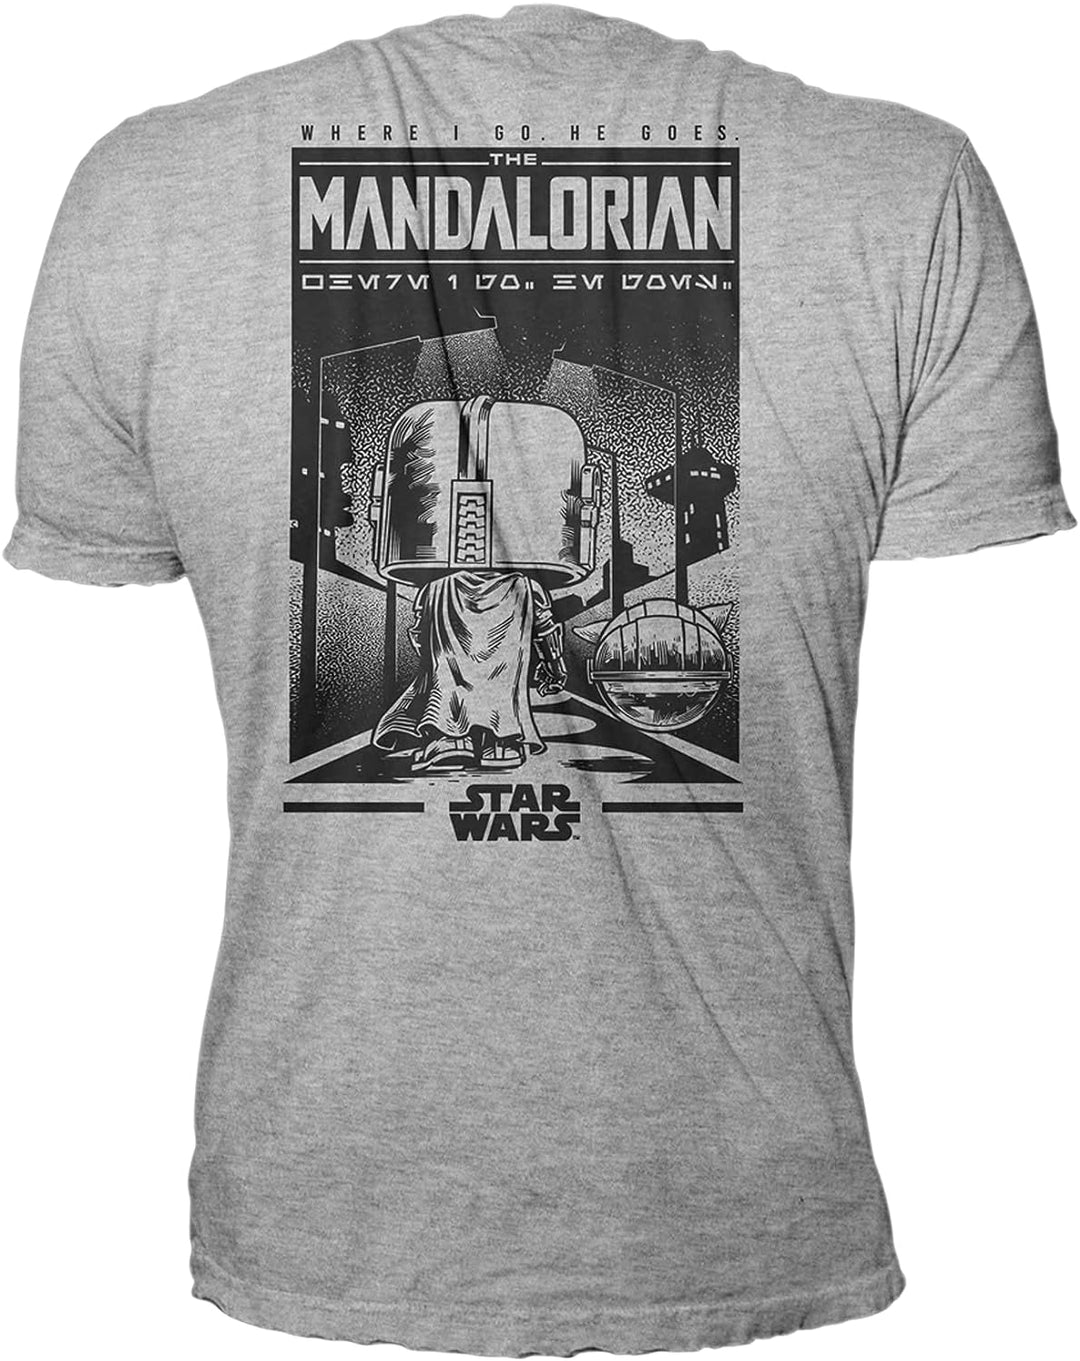 Star Wars the Mandalorian Grogu With Cookie Exclusive Funko 63624 Pop! Vinyl #465